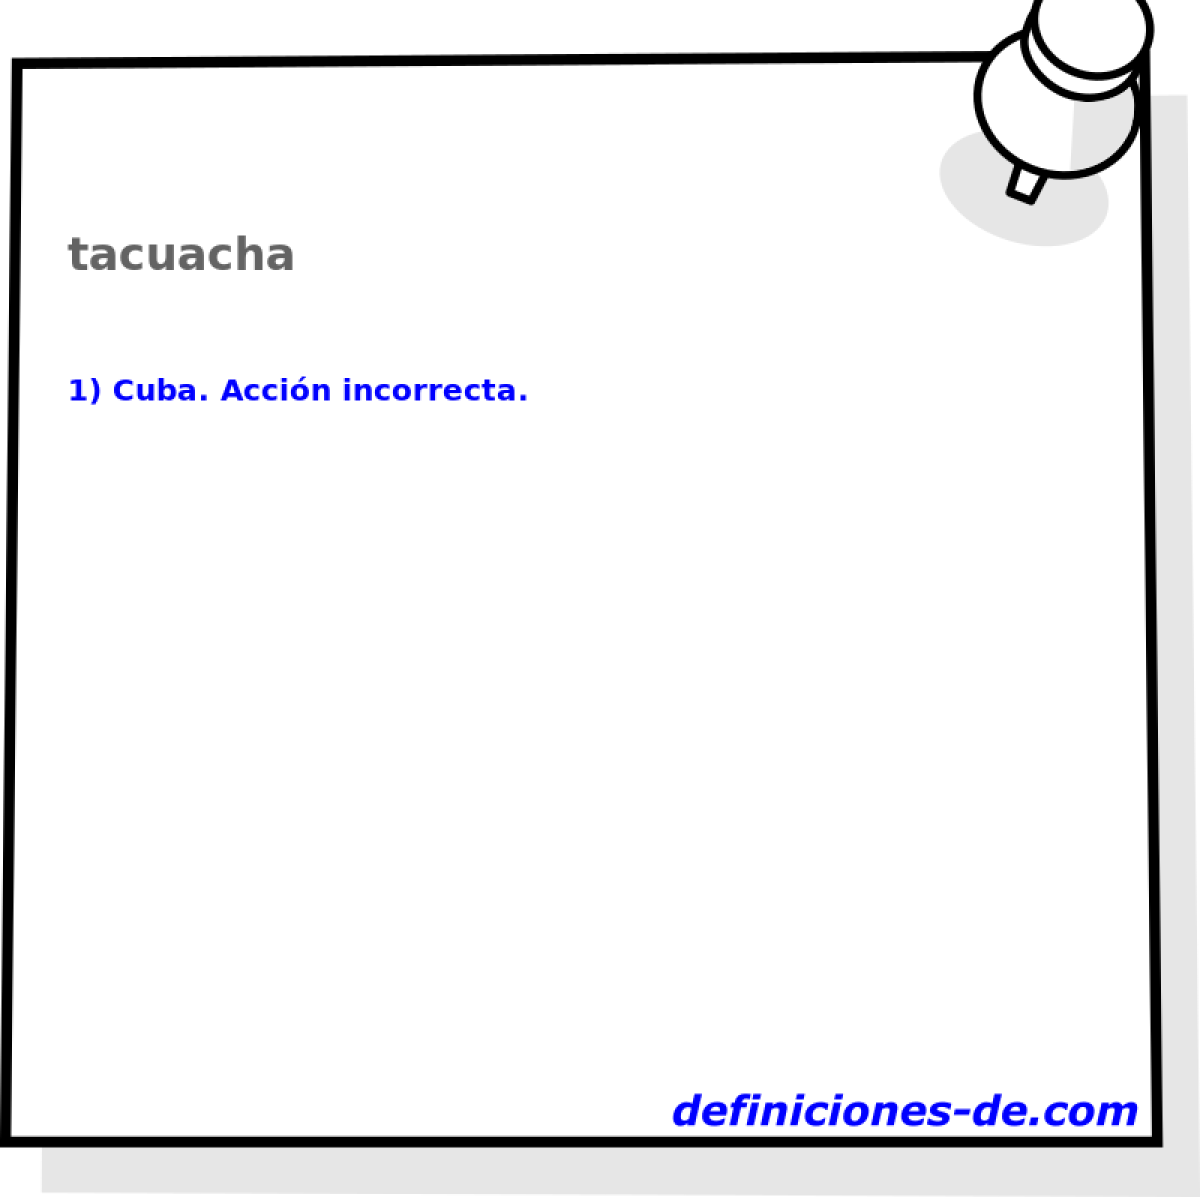 tacuacha 